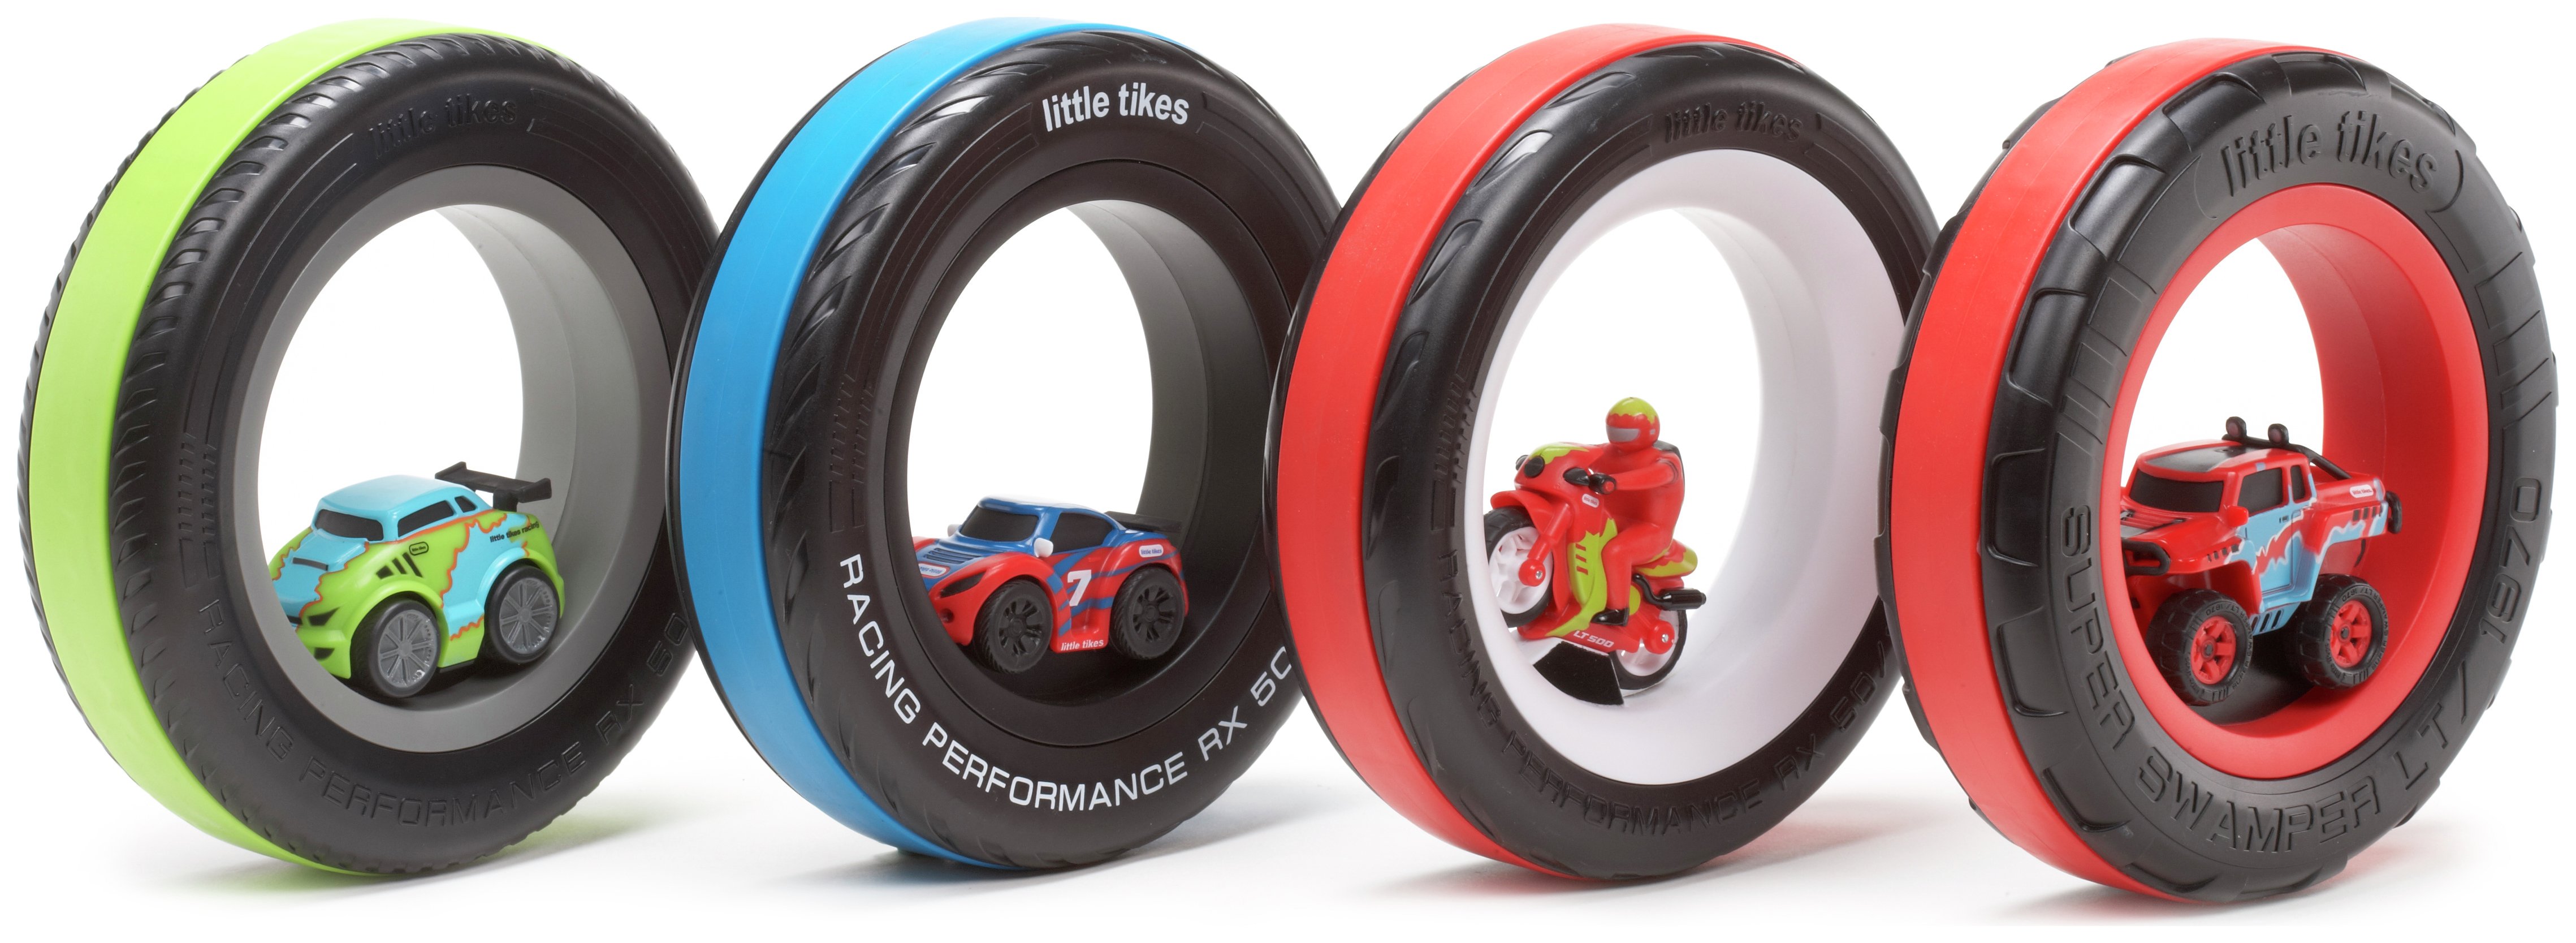 tyre racers little tikes